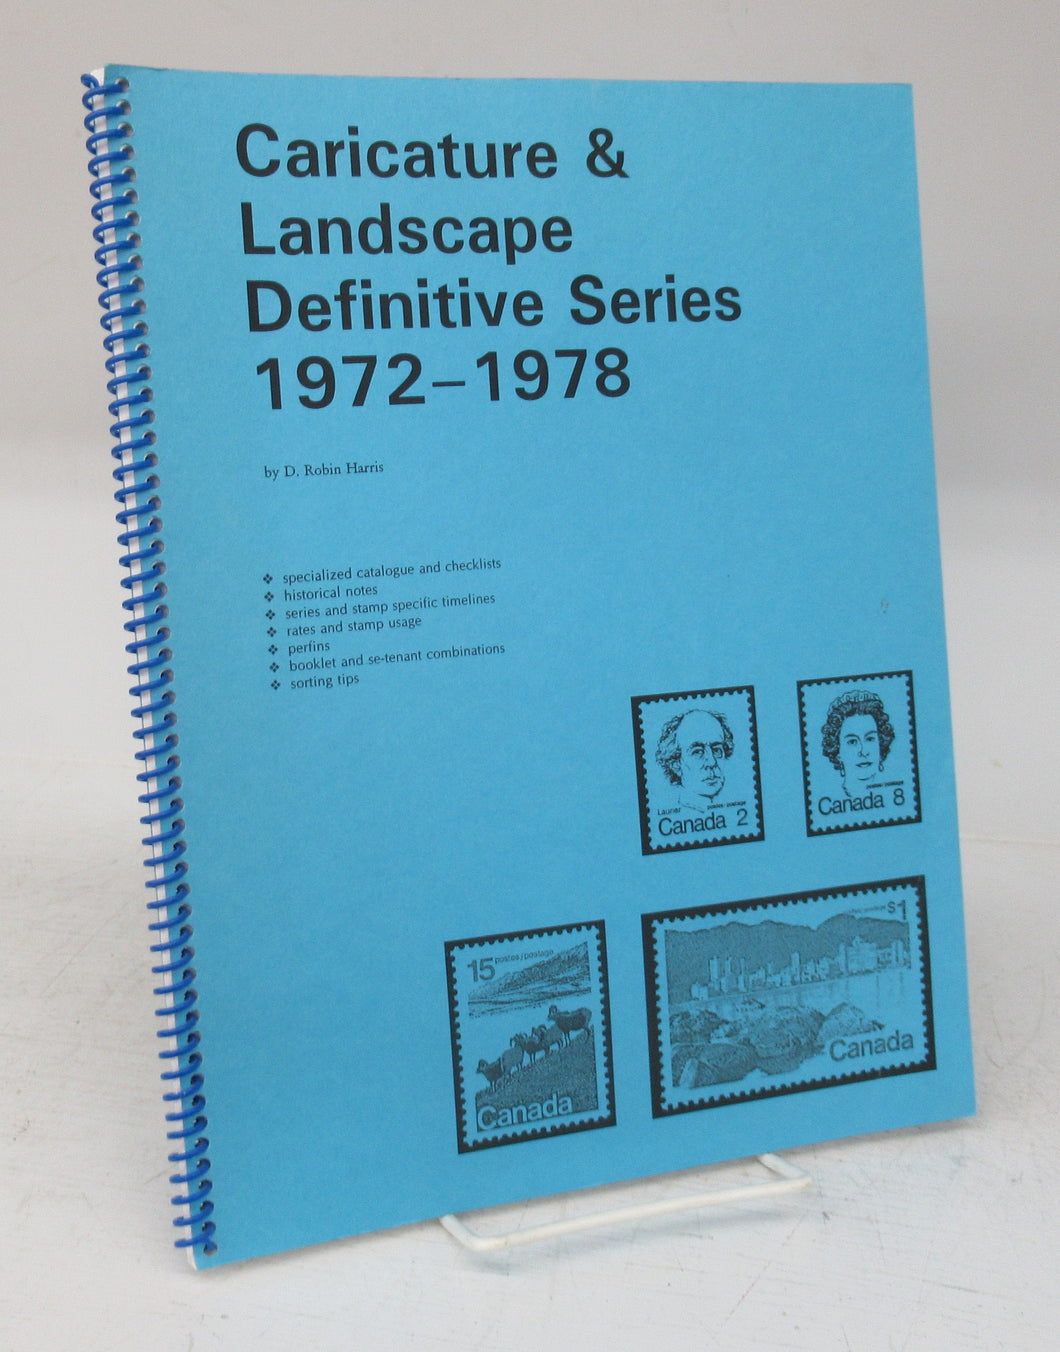 Caricature & Landscape Definitive Series 1972-1978